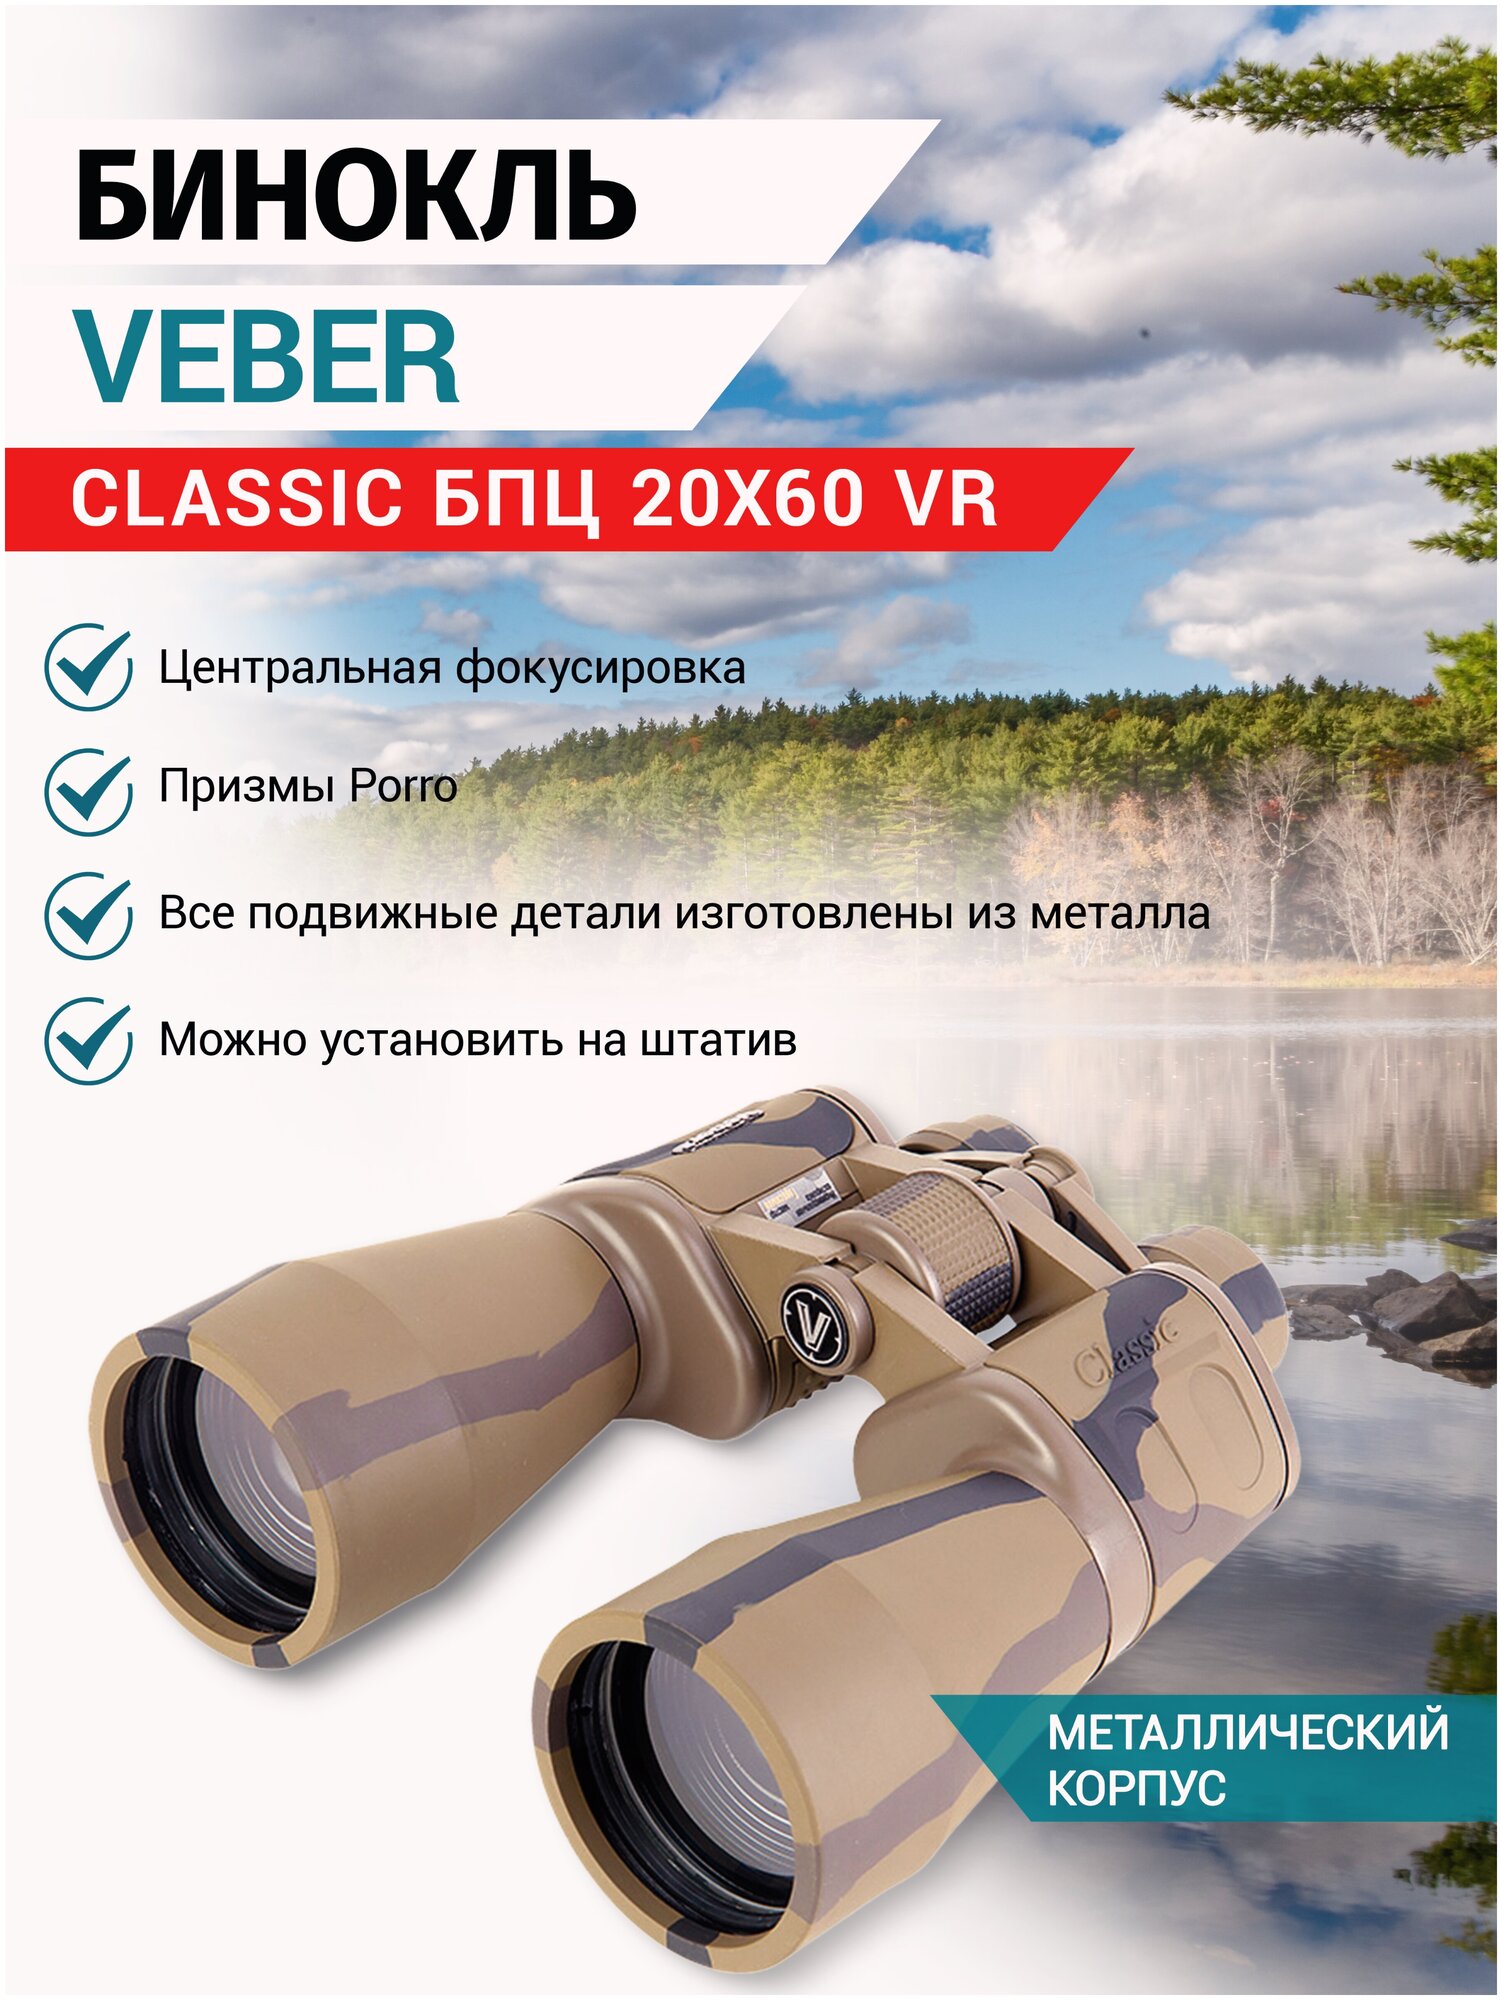 Бинокль Veber Classic БПЦ 20x60 VR